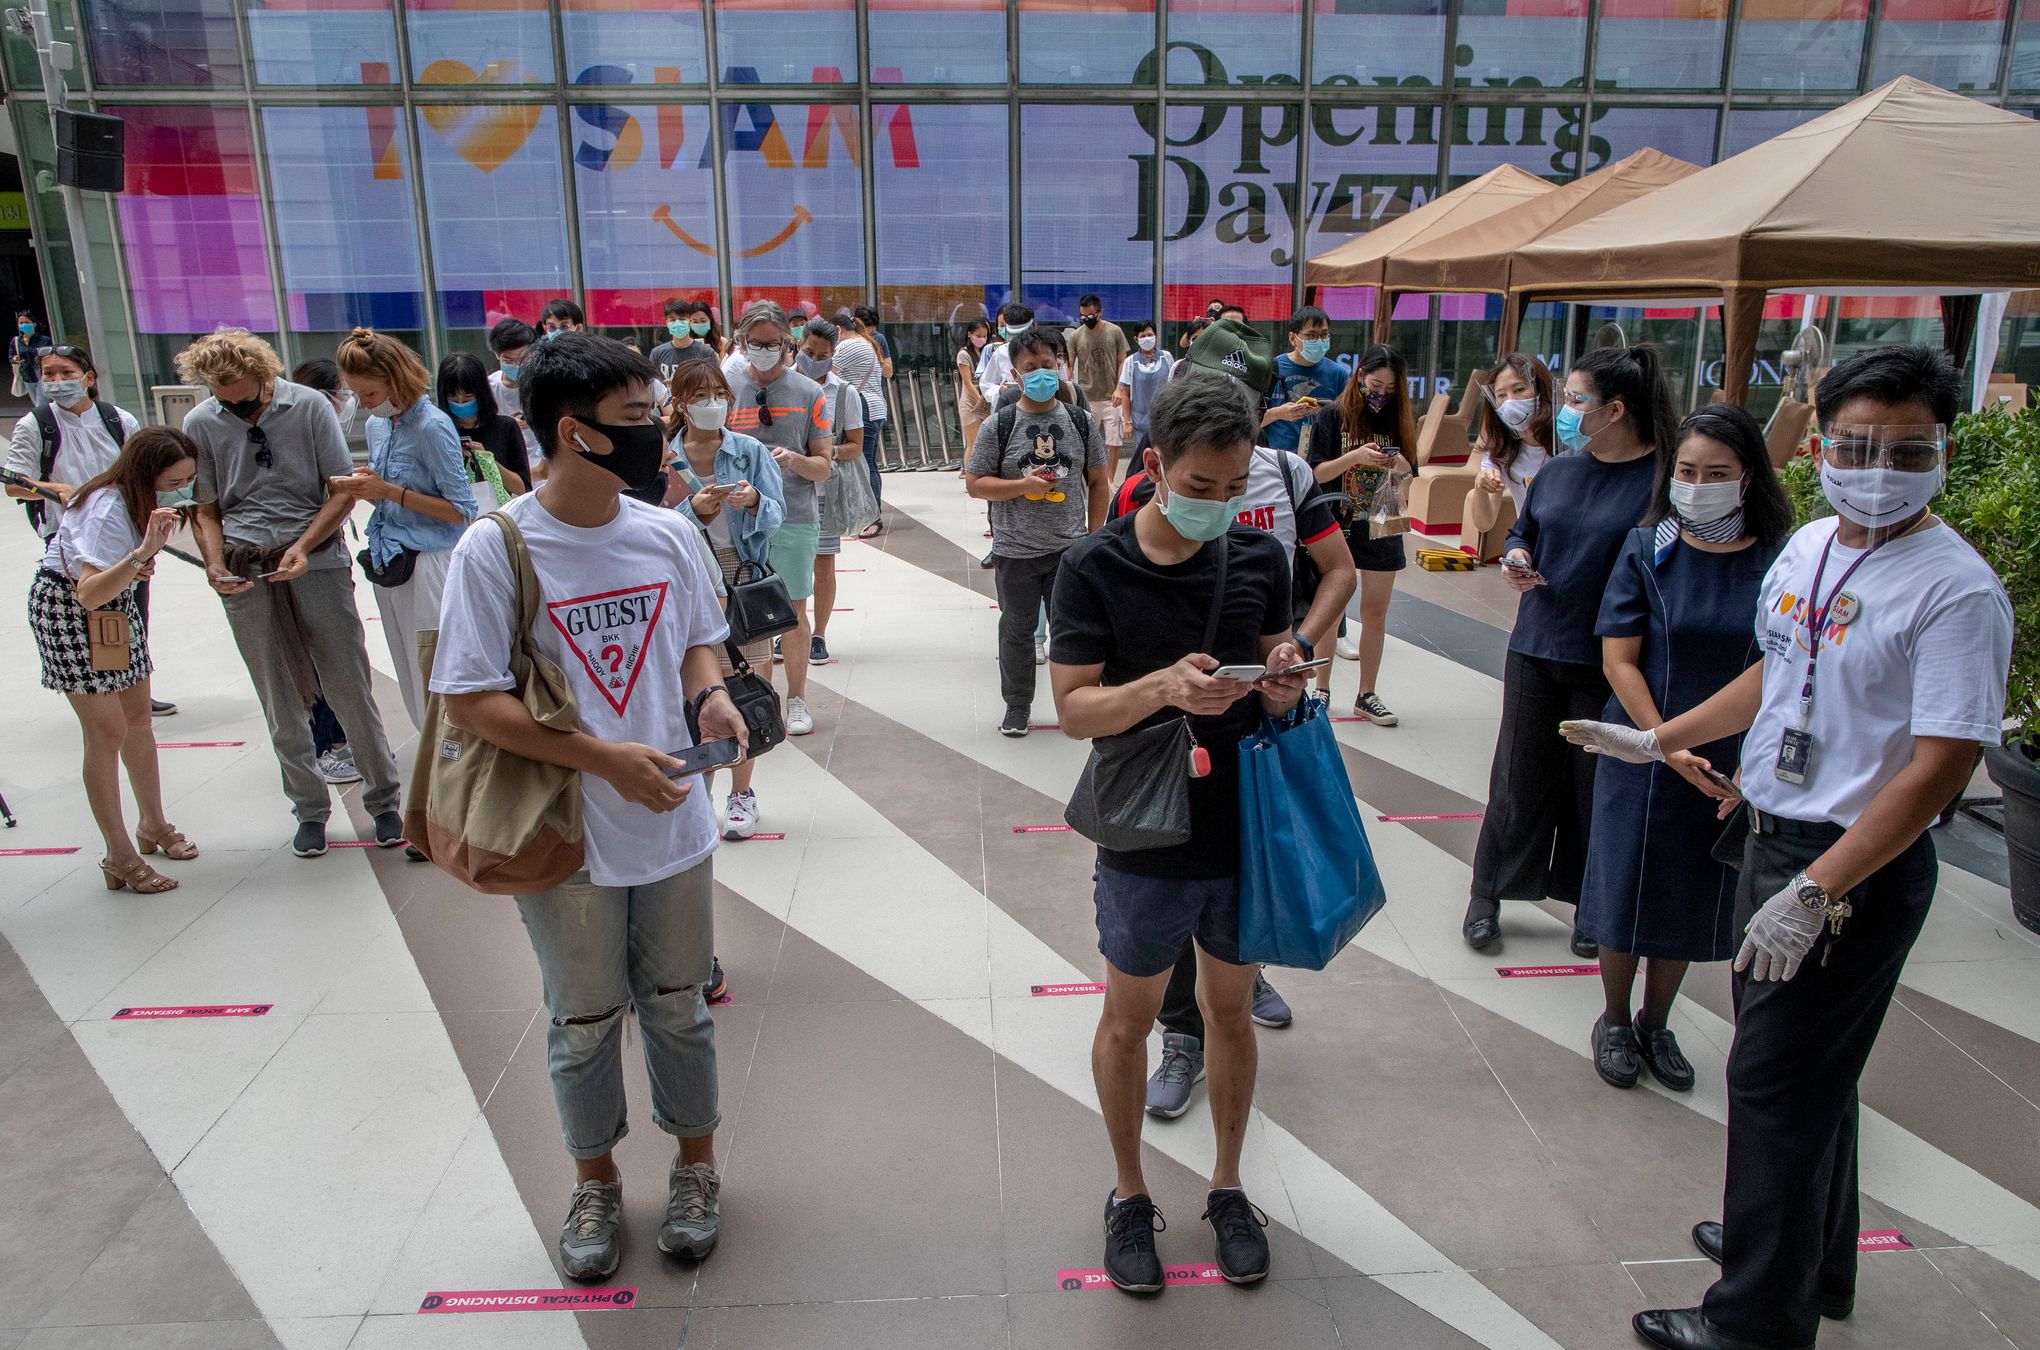 Thailand malls reopen, with temperatures taken, masks worn - The Mainichi